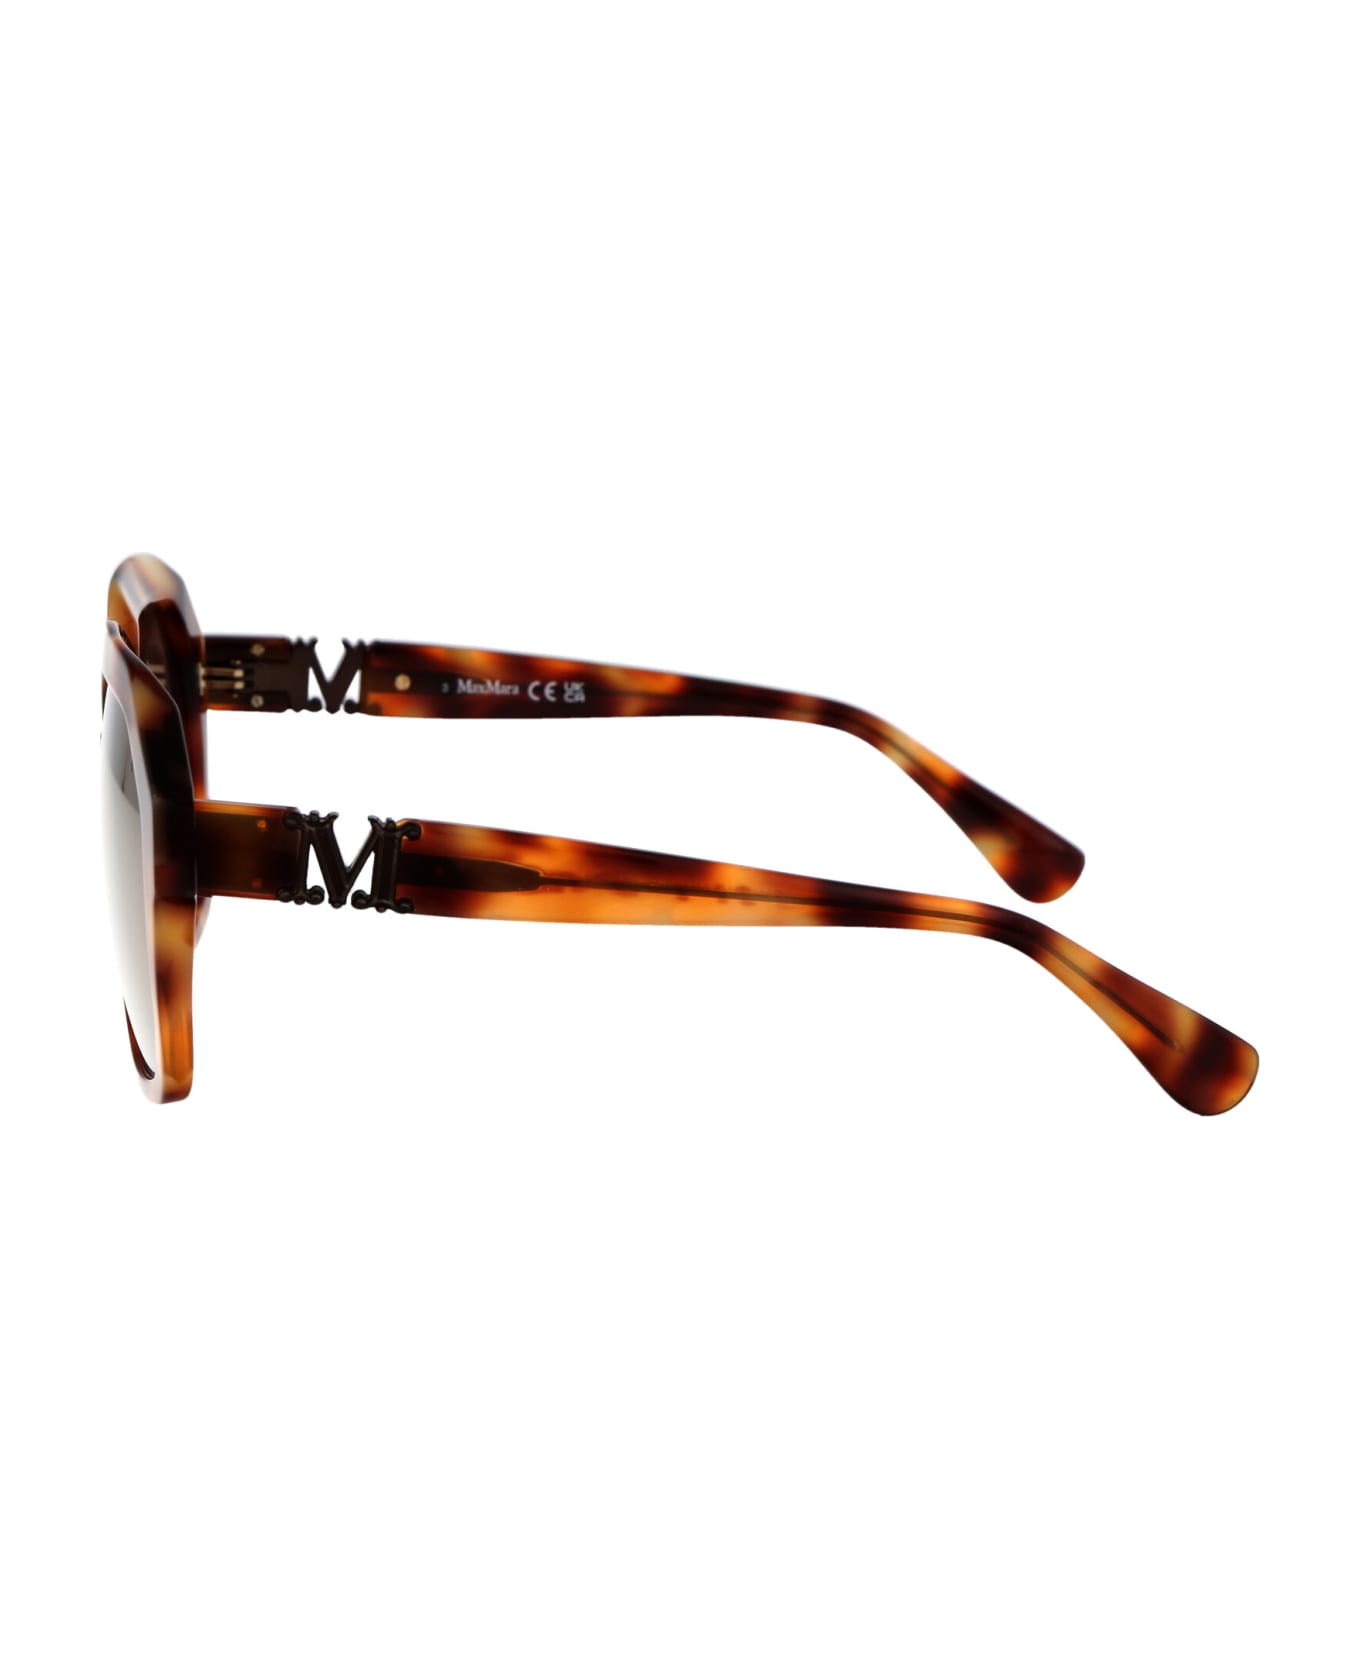 Max Mara Emme12 Sunglasses - 53E Avana Bionda/Marrone サングラス